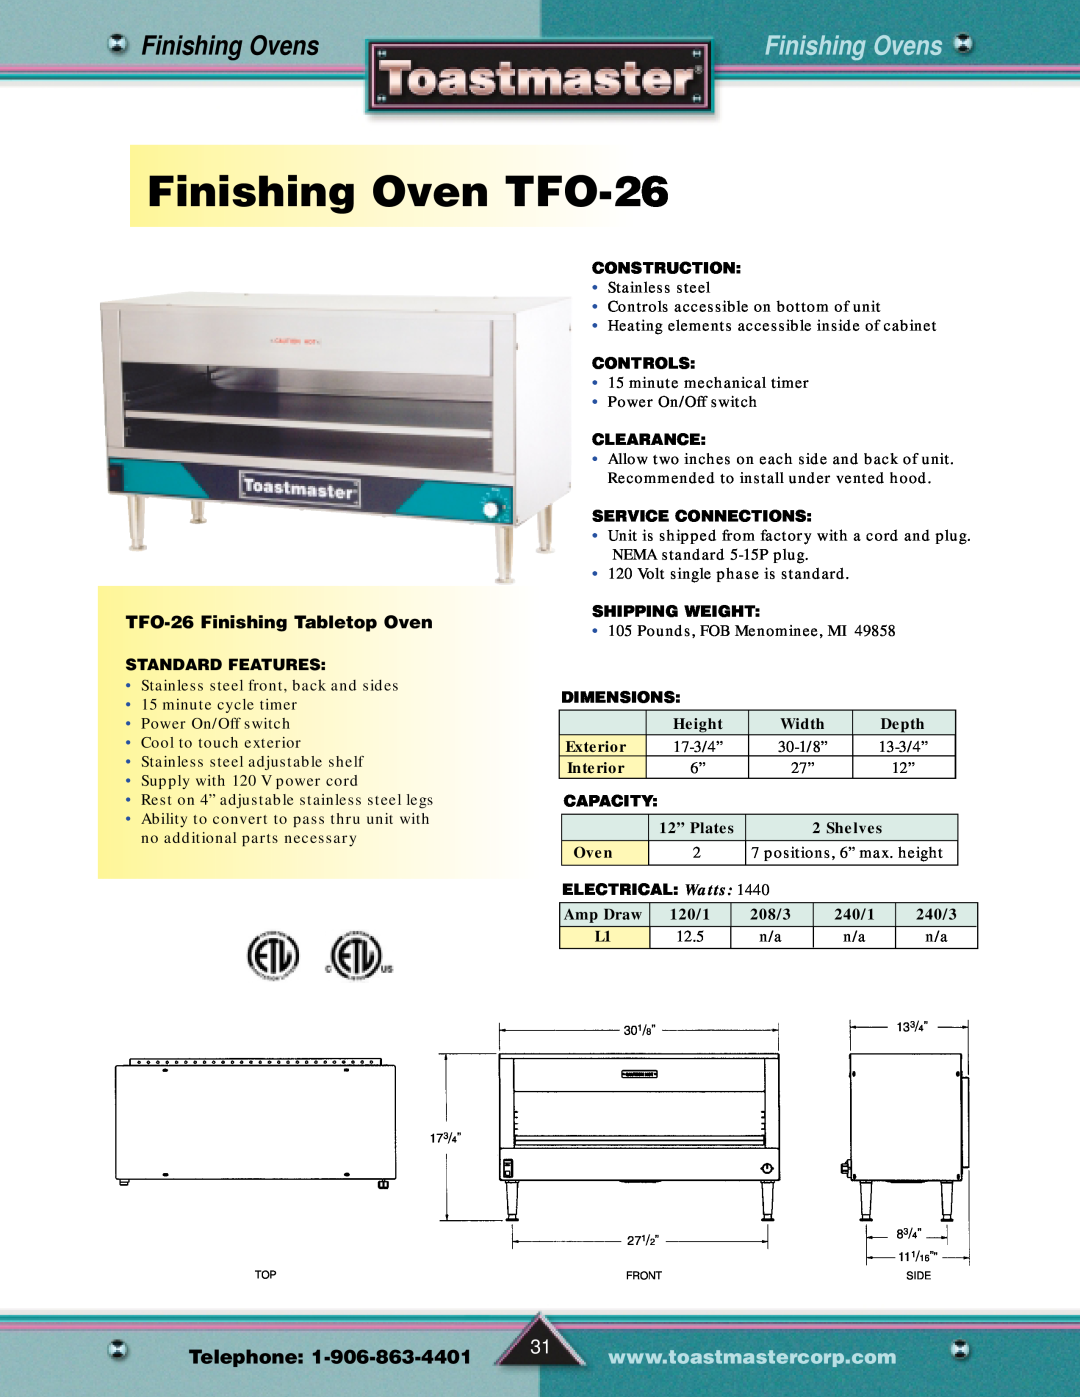 Toastmaster Gas & Electric Fryer manual FinishingOvenTFO-26, TFO-26 Finishing Tabletop Oven, Finishing Ovens, Telephone 